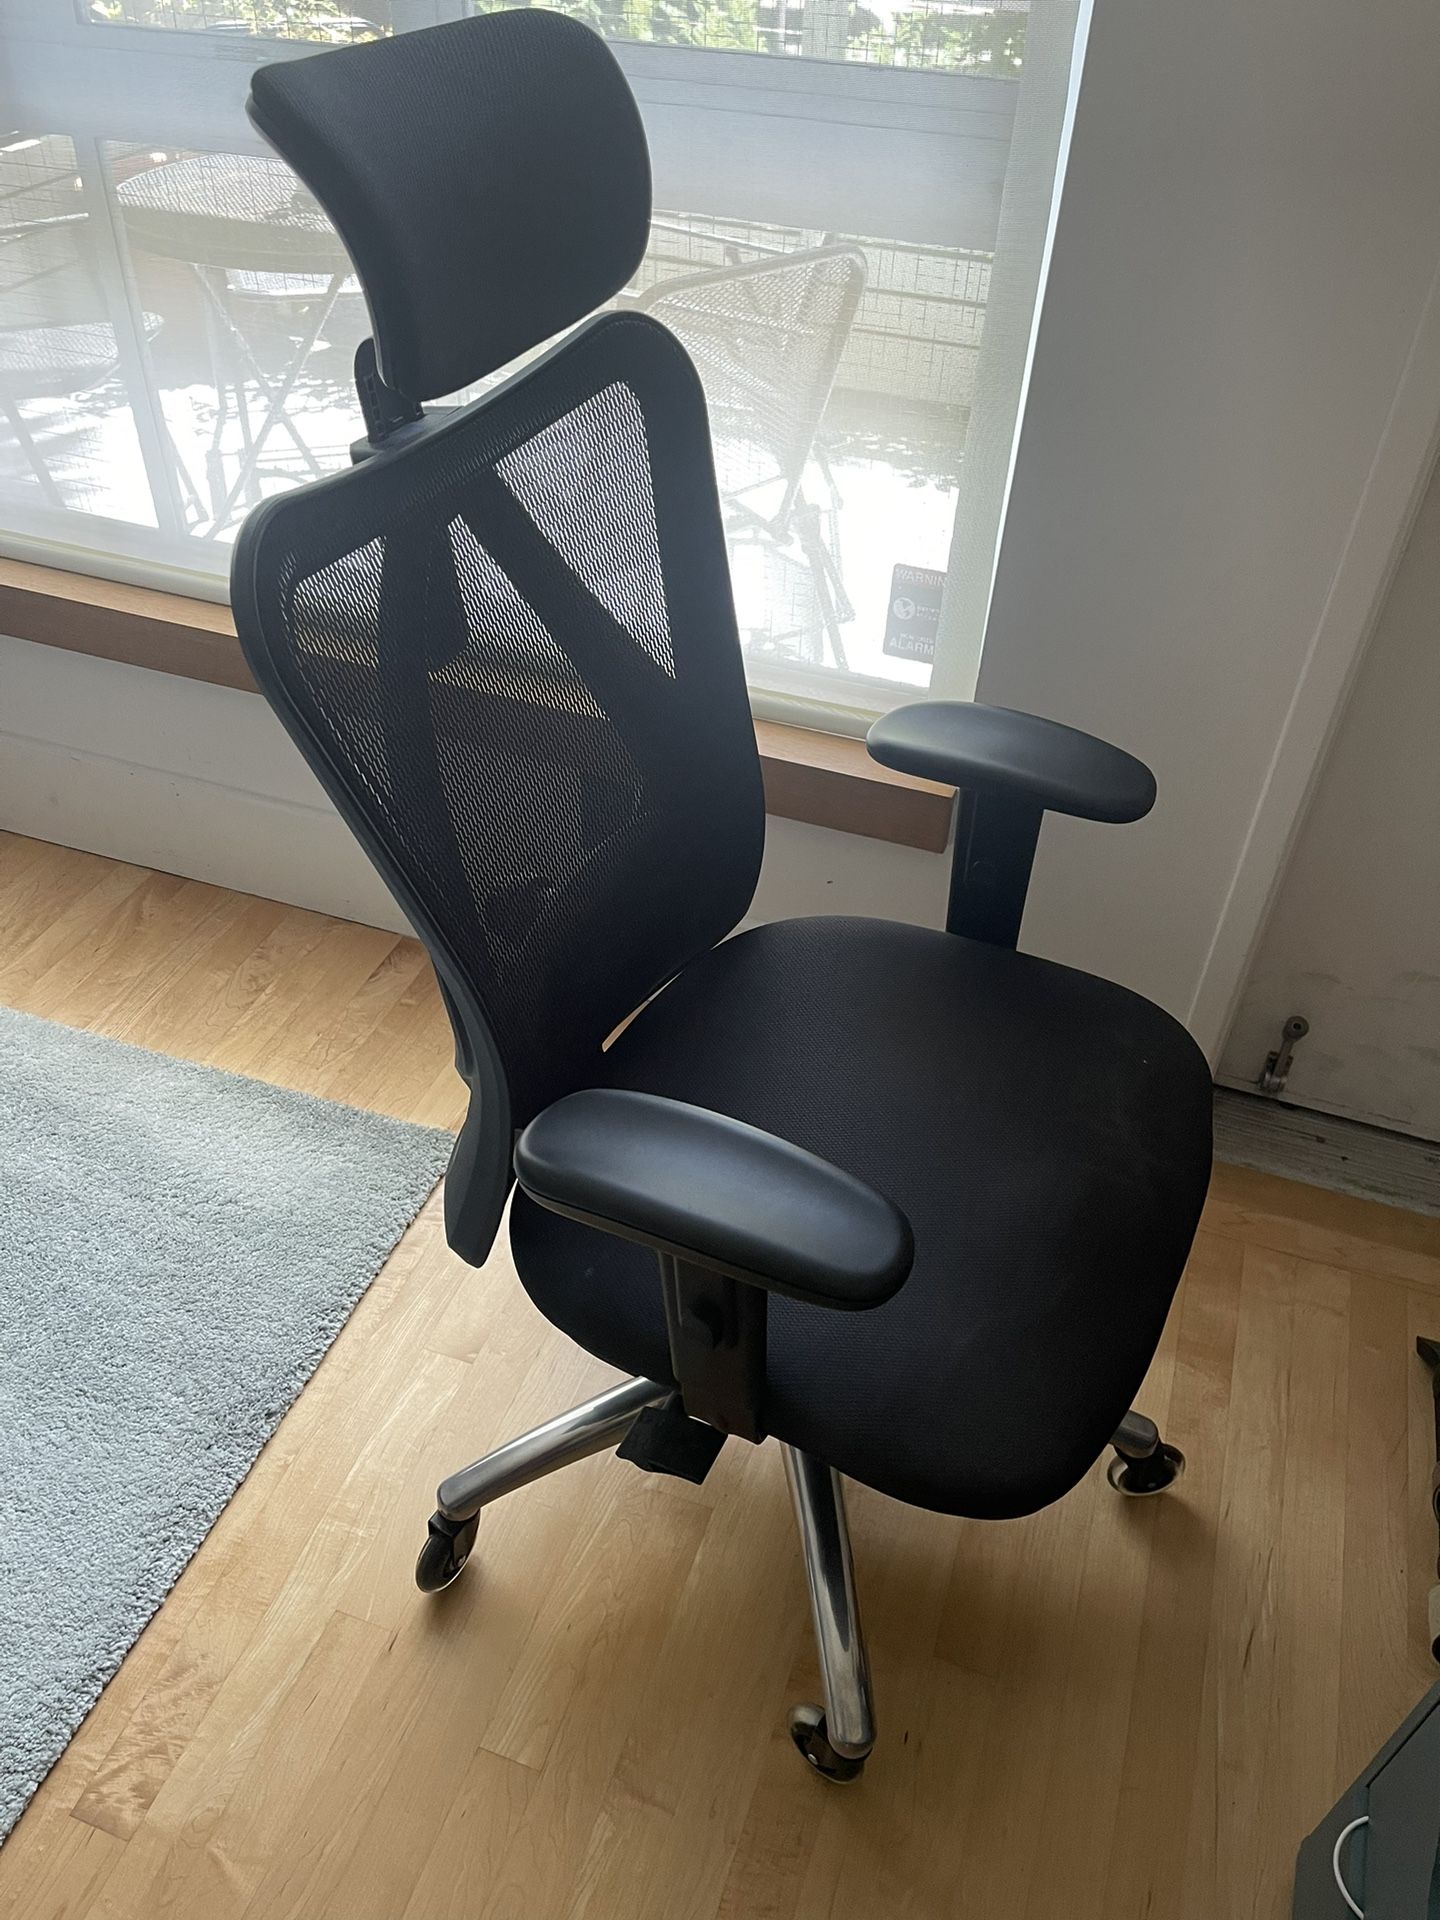 Ergonomic Office Chair With Headrest